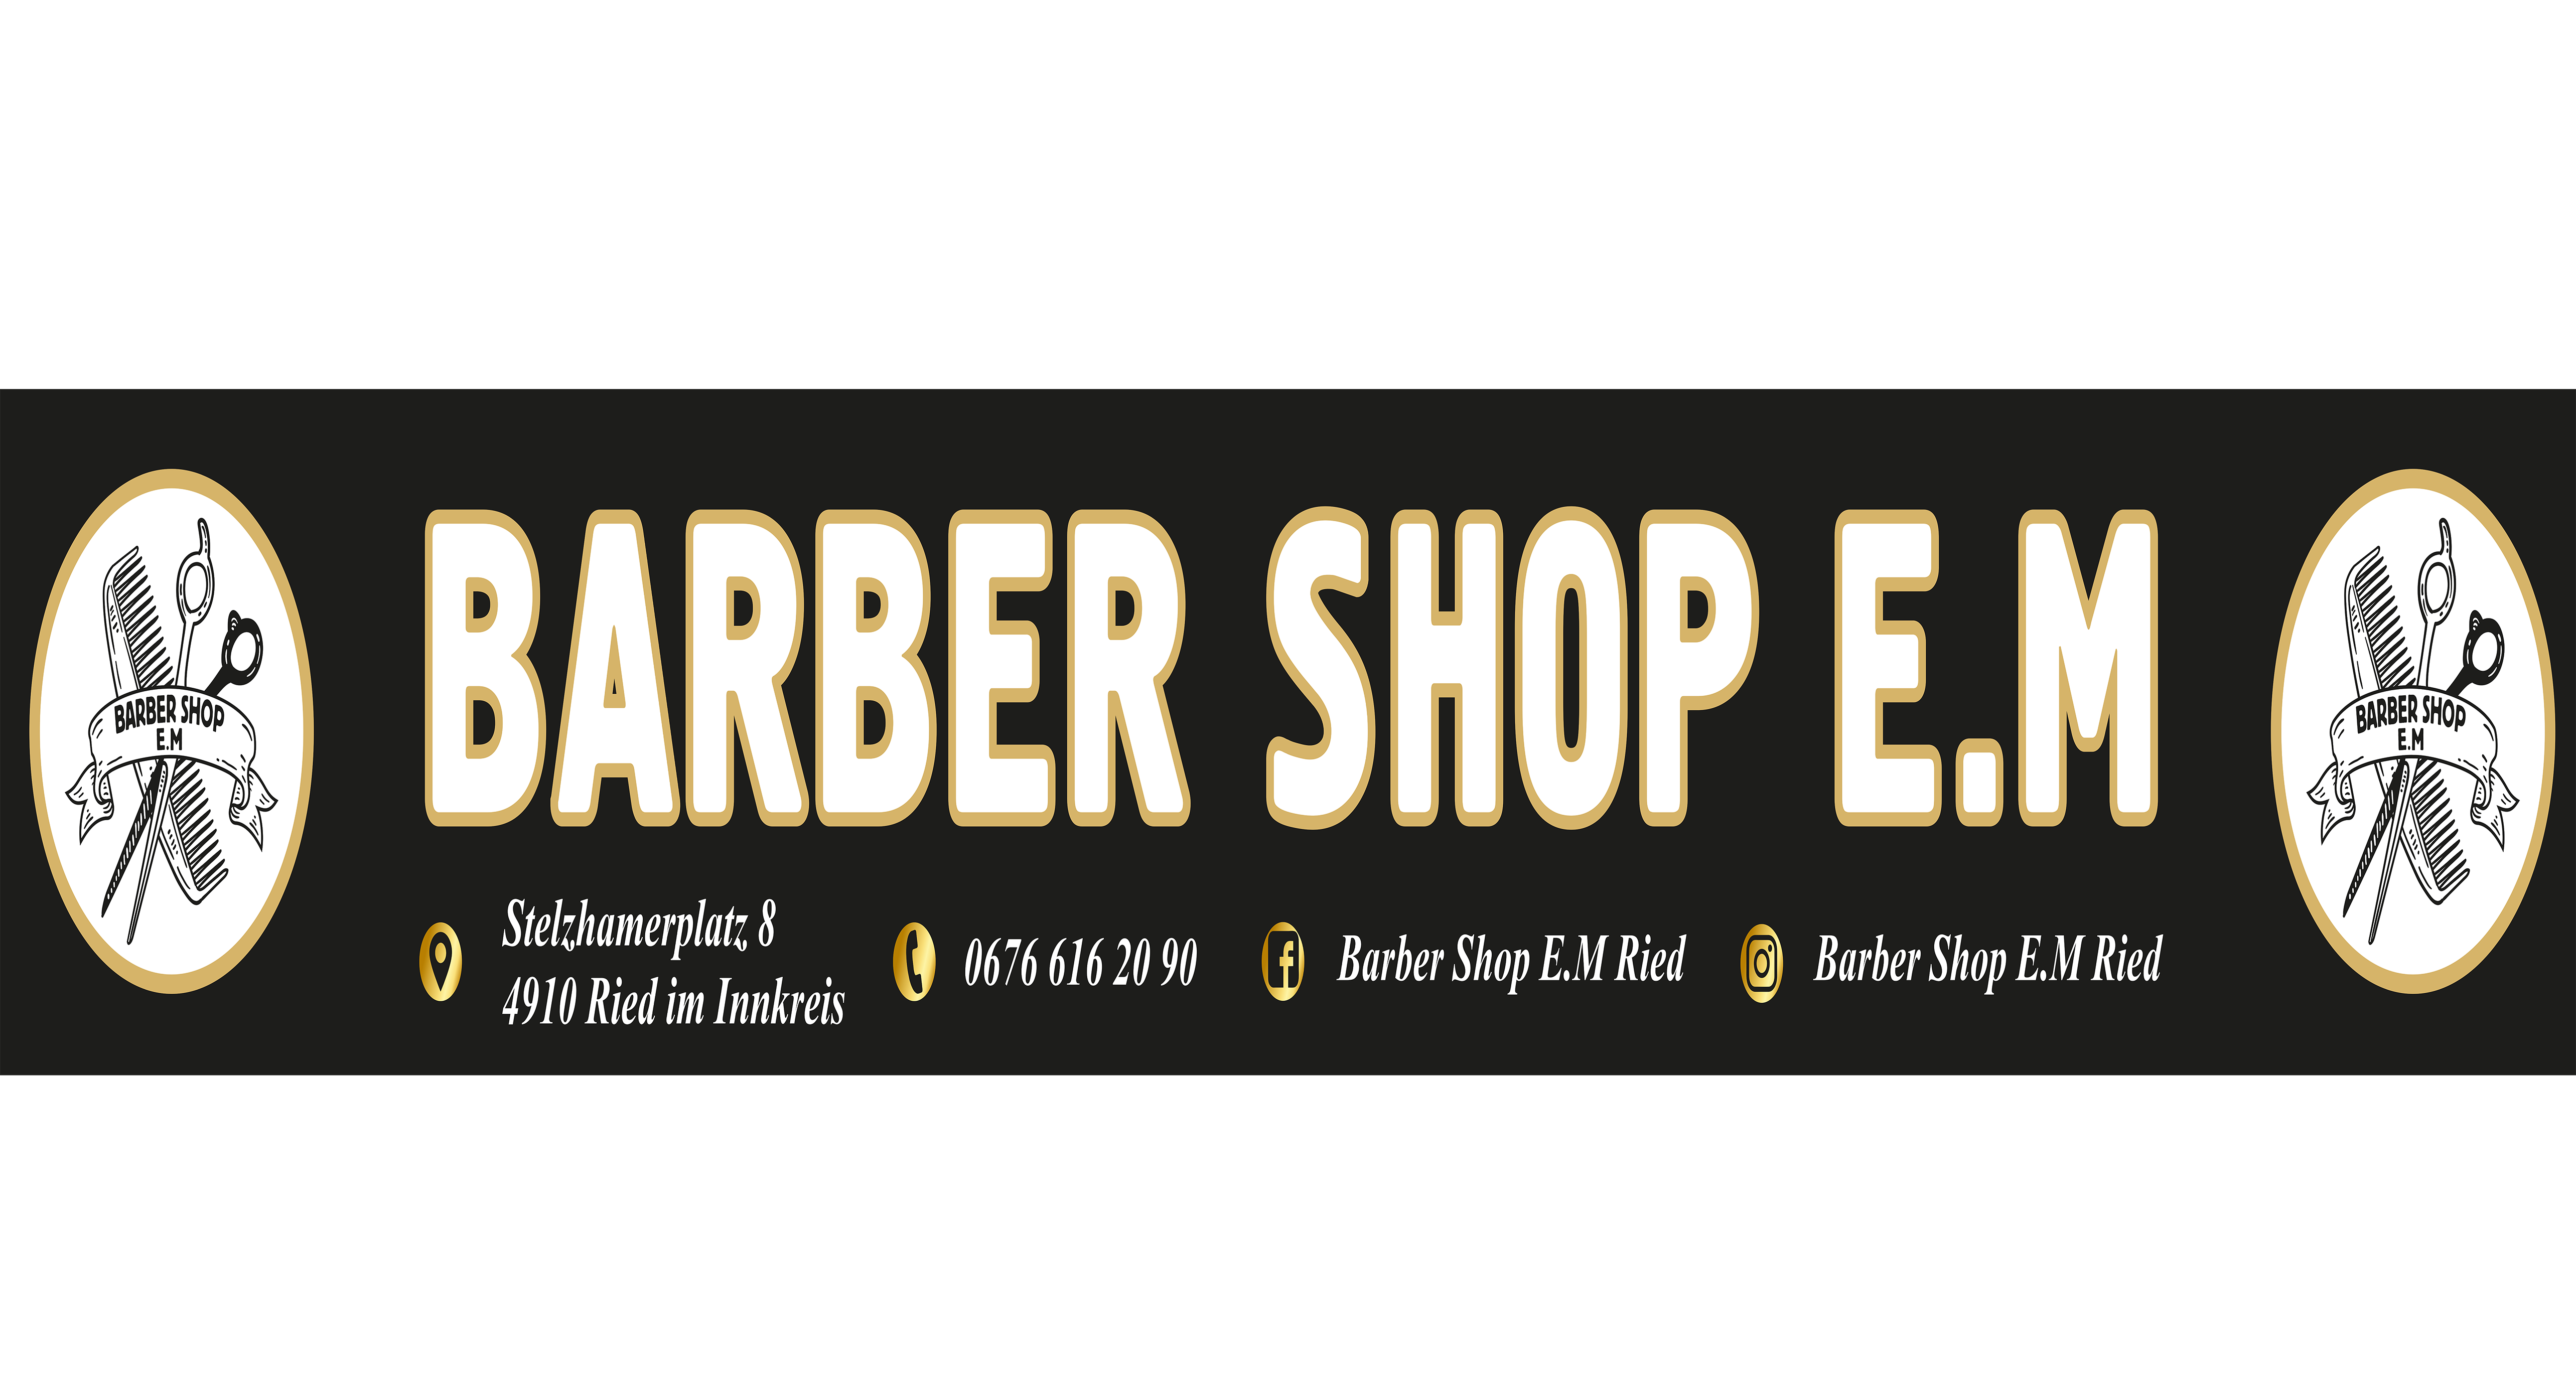 Barber Shop E.M